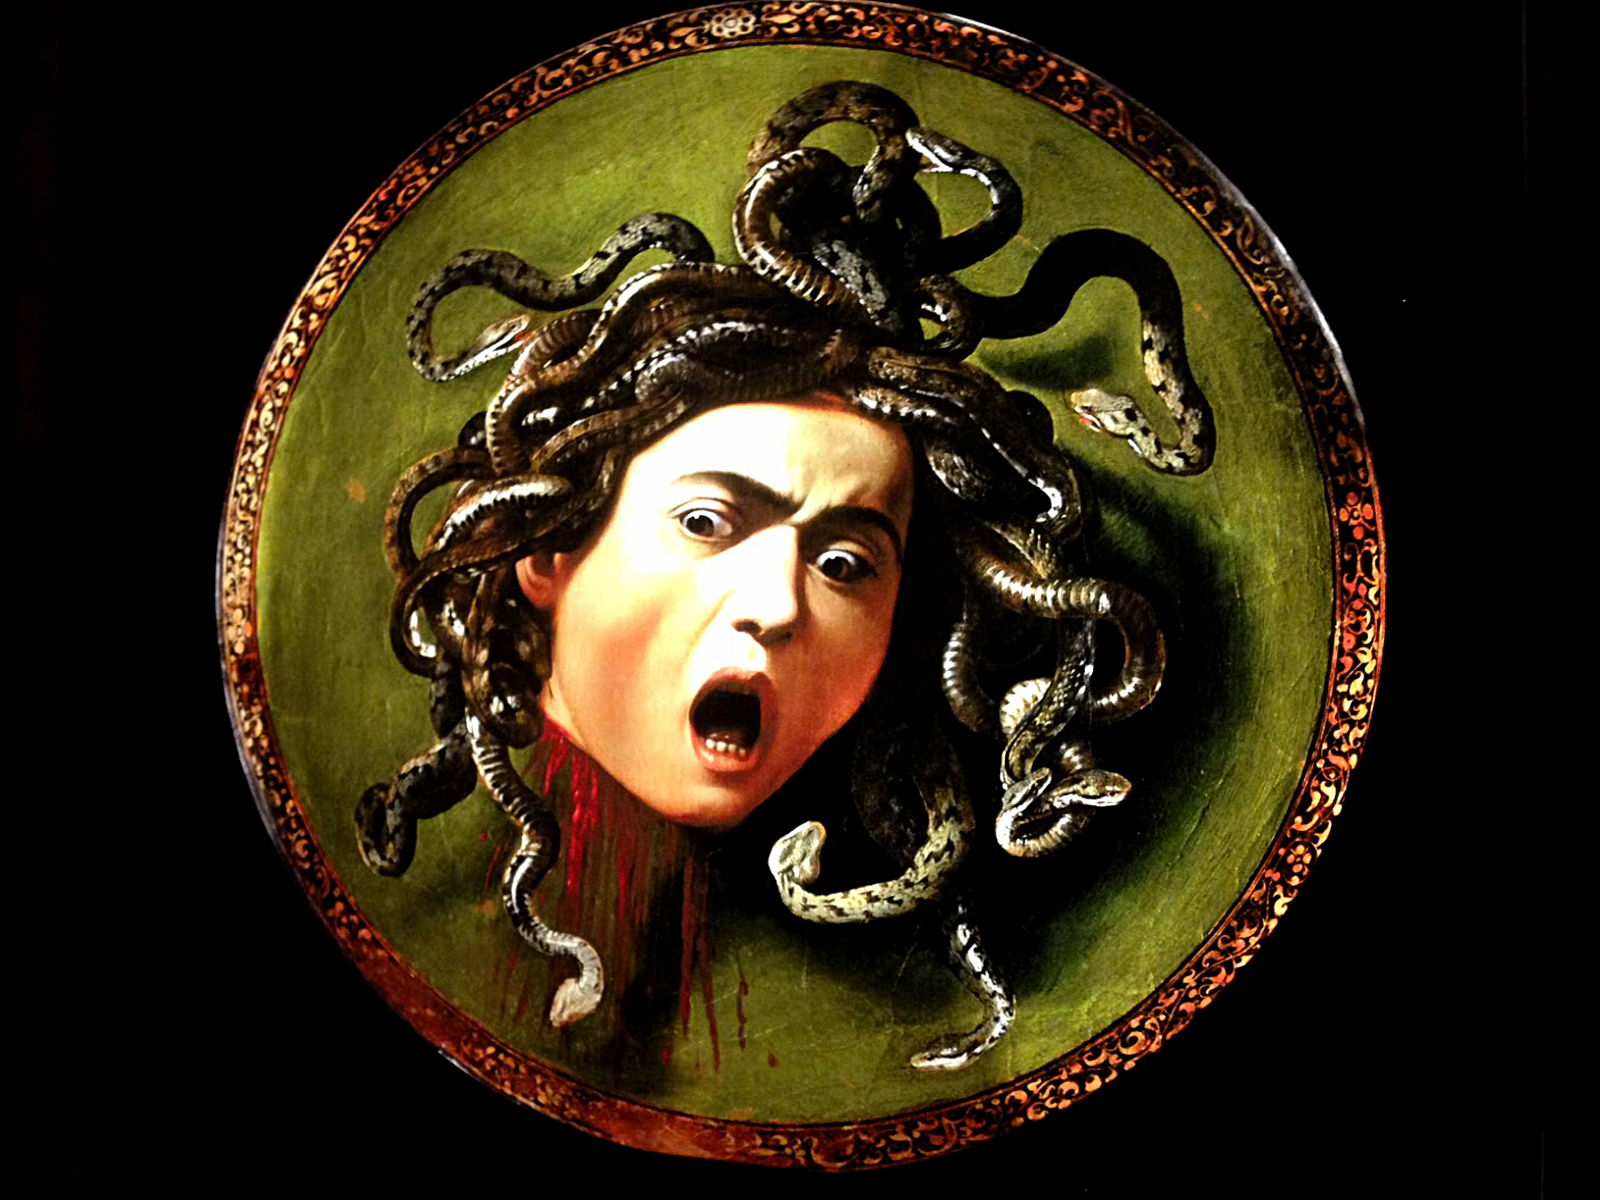 Gallery of Caravaggio Medusa Head.